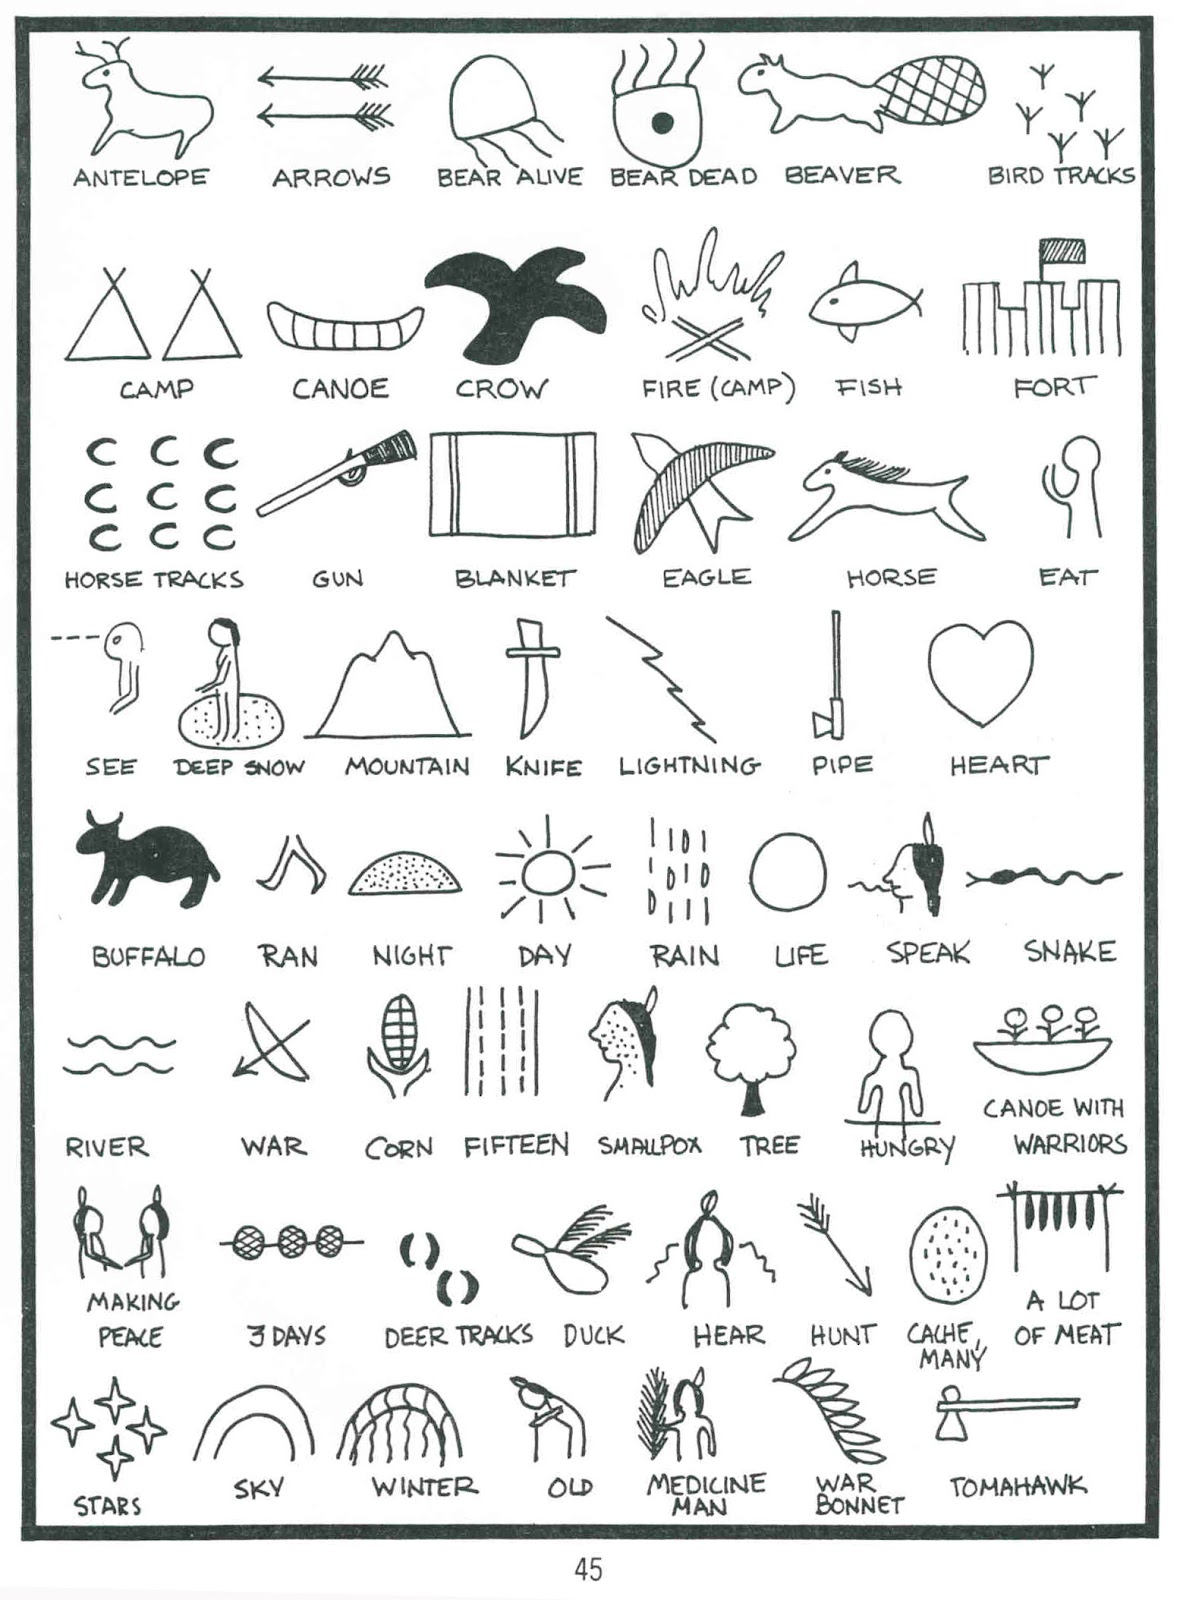 Native American Indian Symbols